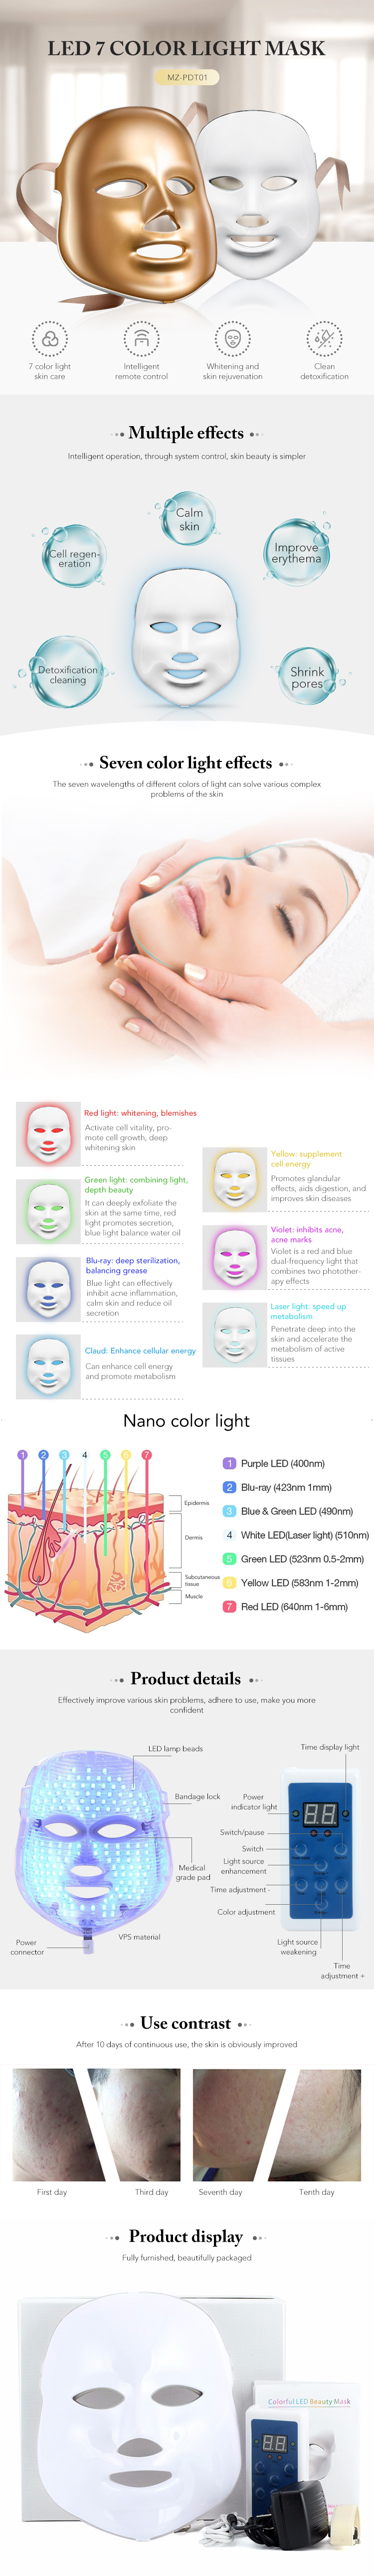 Reduce wrinkles Photon LED Facial Mask